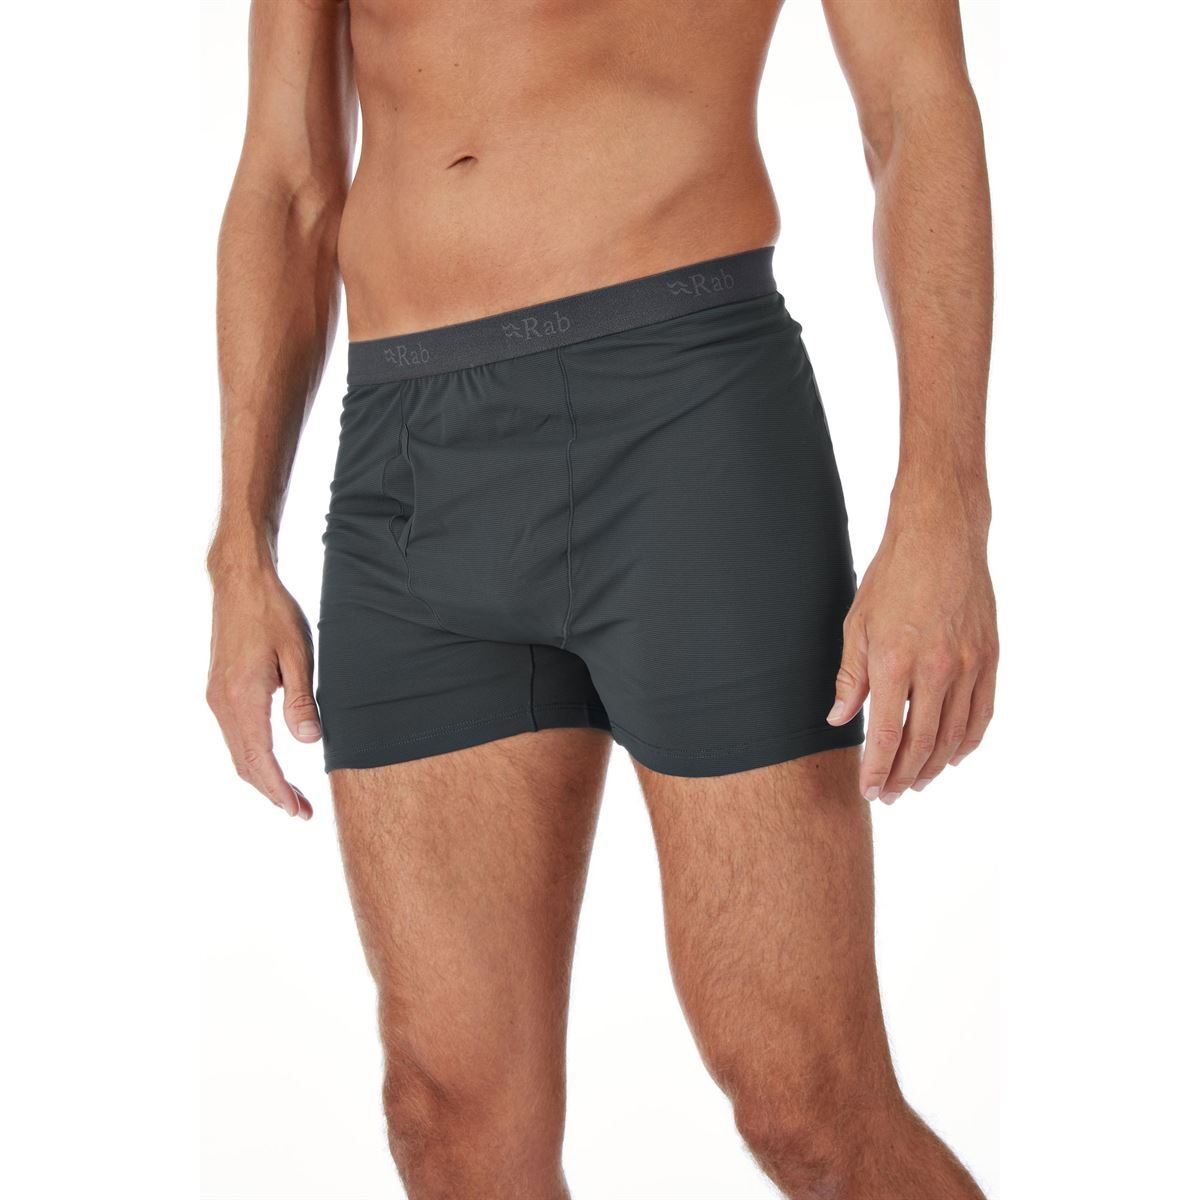 Rab Men's Forge Boxers, Underwear